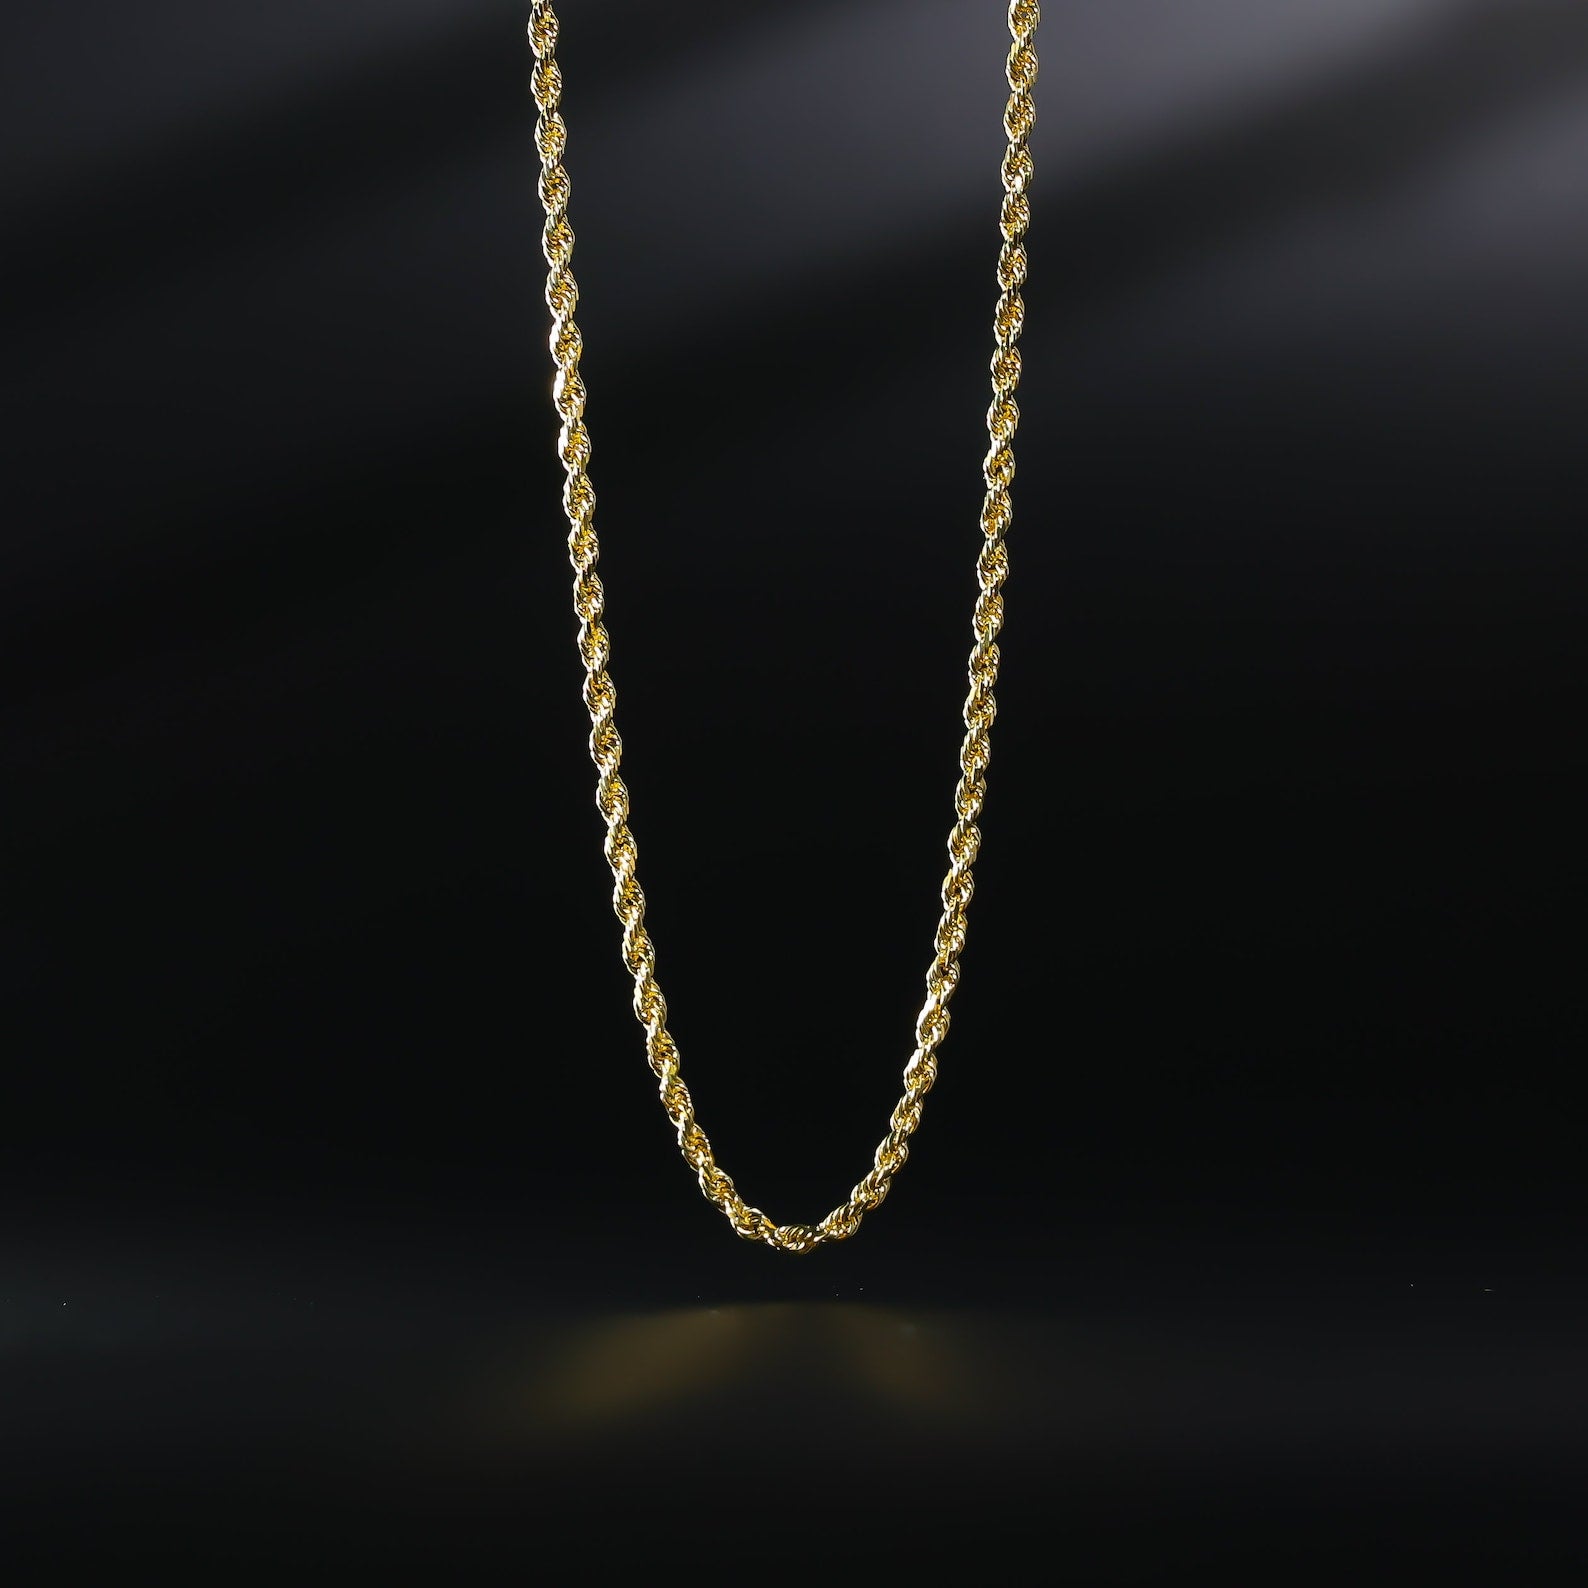 Gold Crucifix Cross Pendant Model-0838 - Charlie & Co. Jewelry